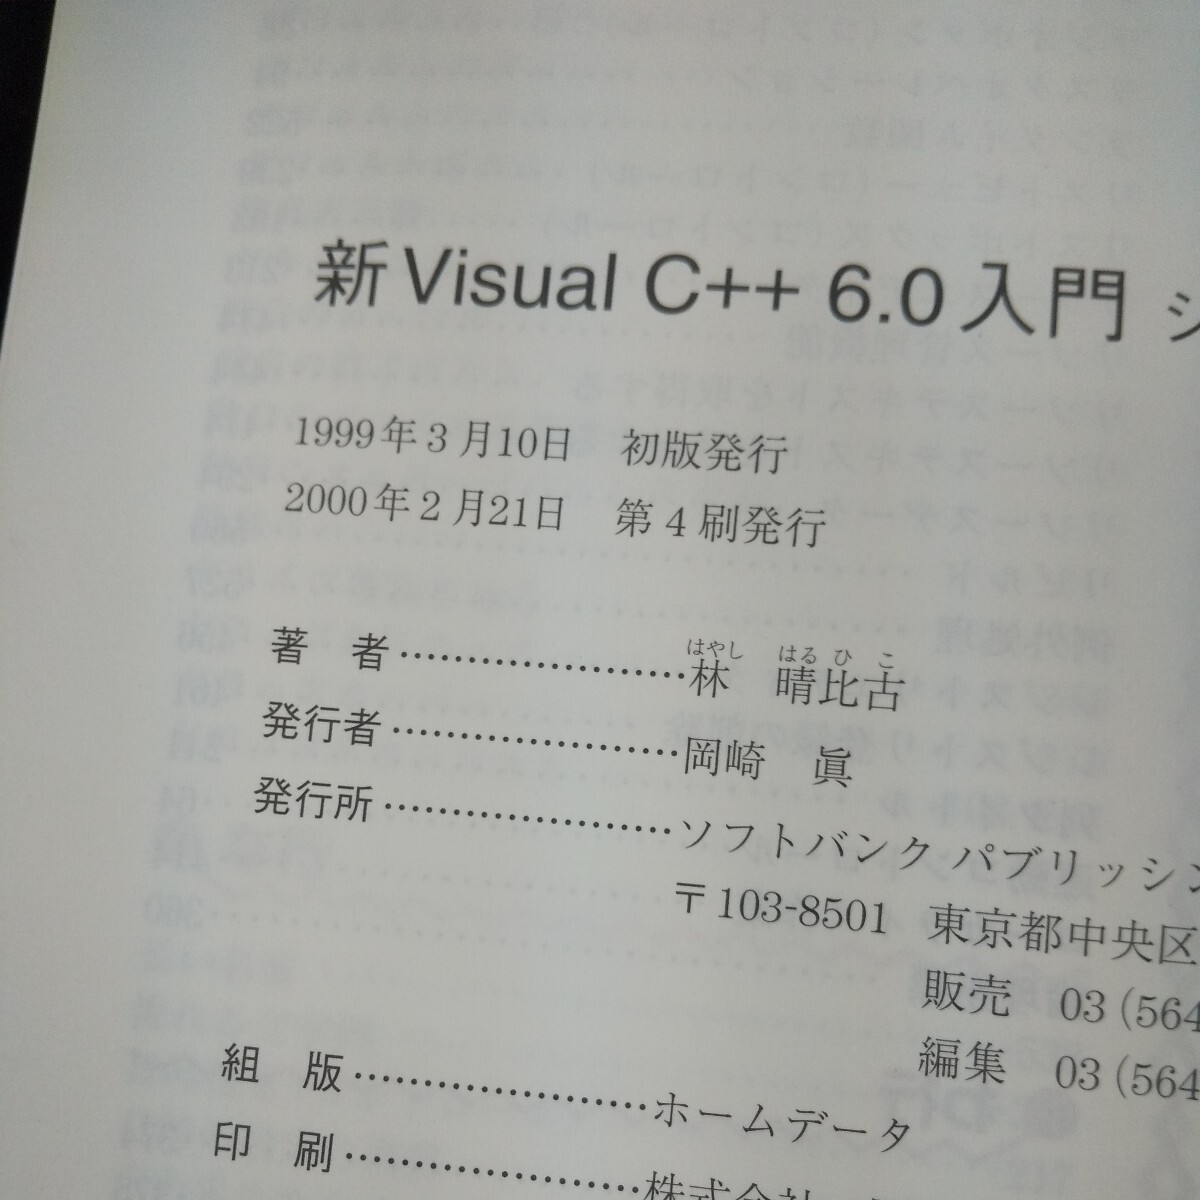 L-422 新Visual C++6.0入門 シニア編 林晴比古/著 ソフトバンク 実用マスターシリーズ② 2000年発行 パソコン 単純データ型クラス など※10_画像7